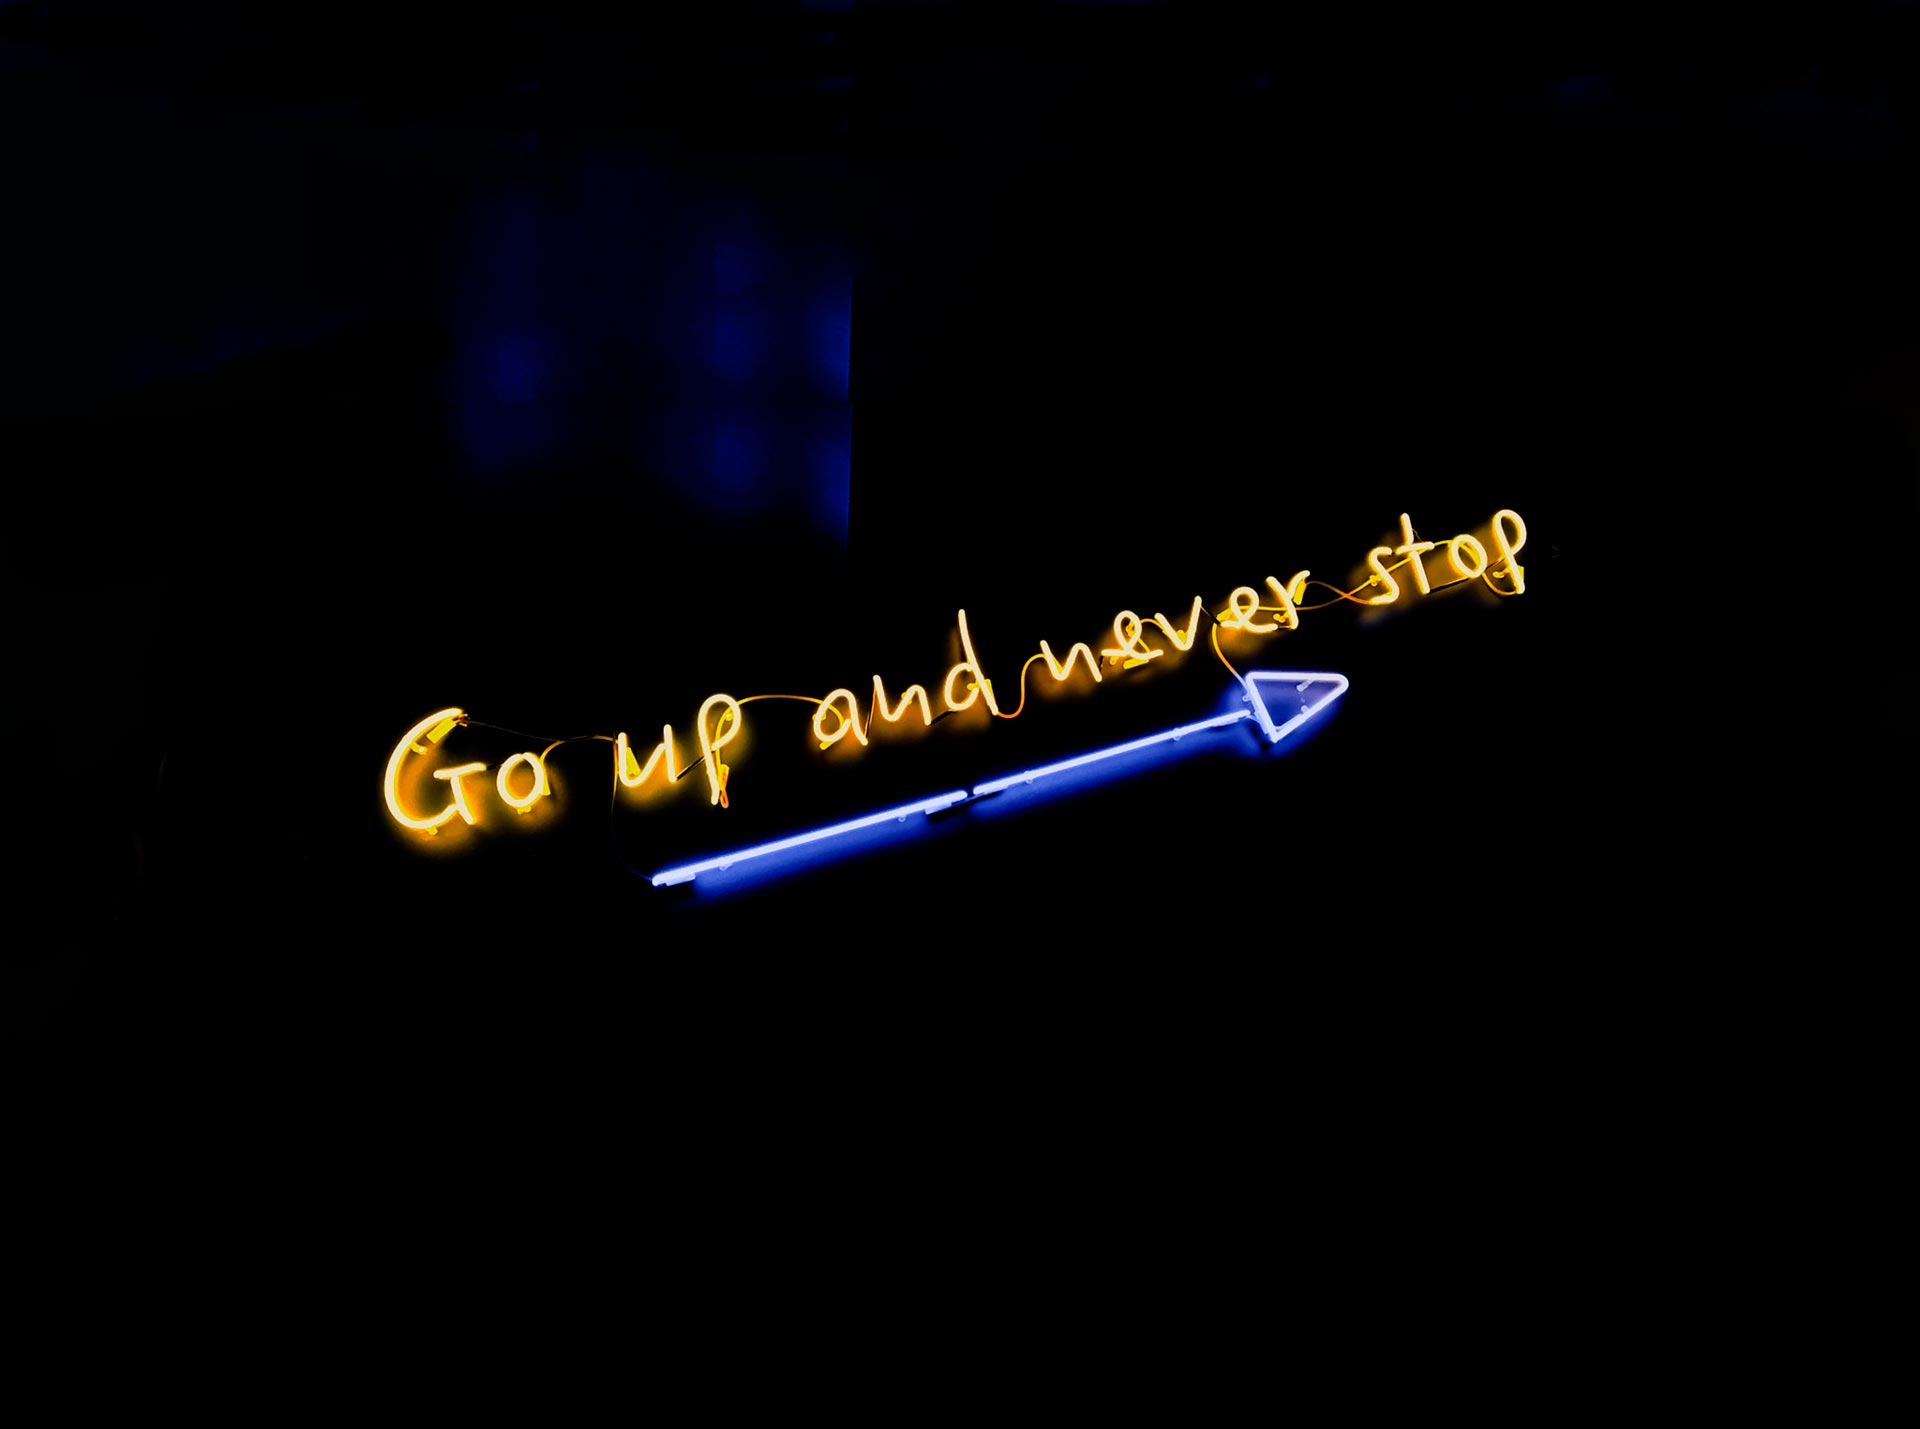 go up and never stop. Cartel de neon con colores corporativos akamai estrategia marketing digital